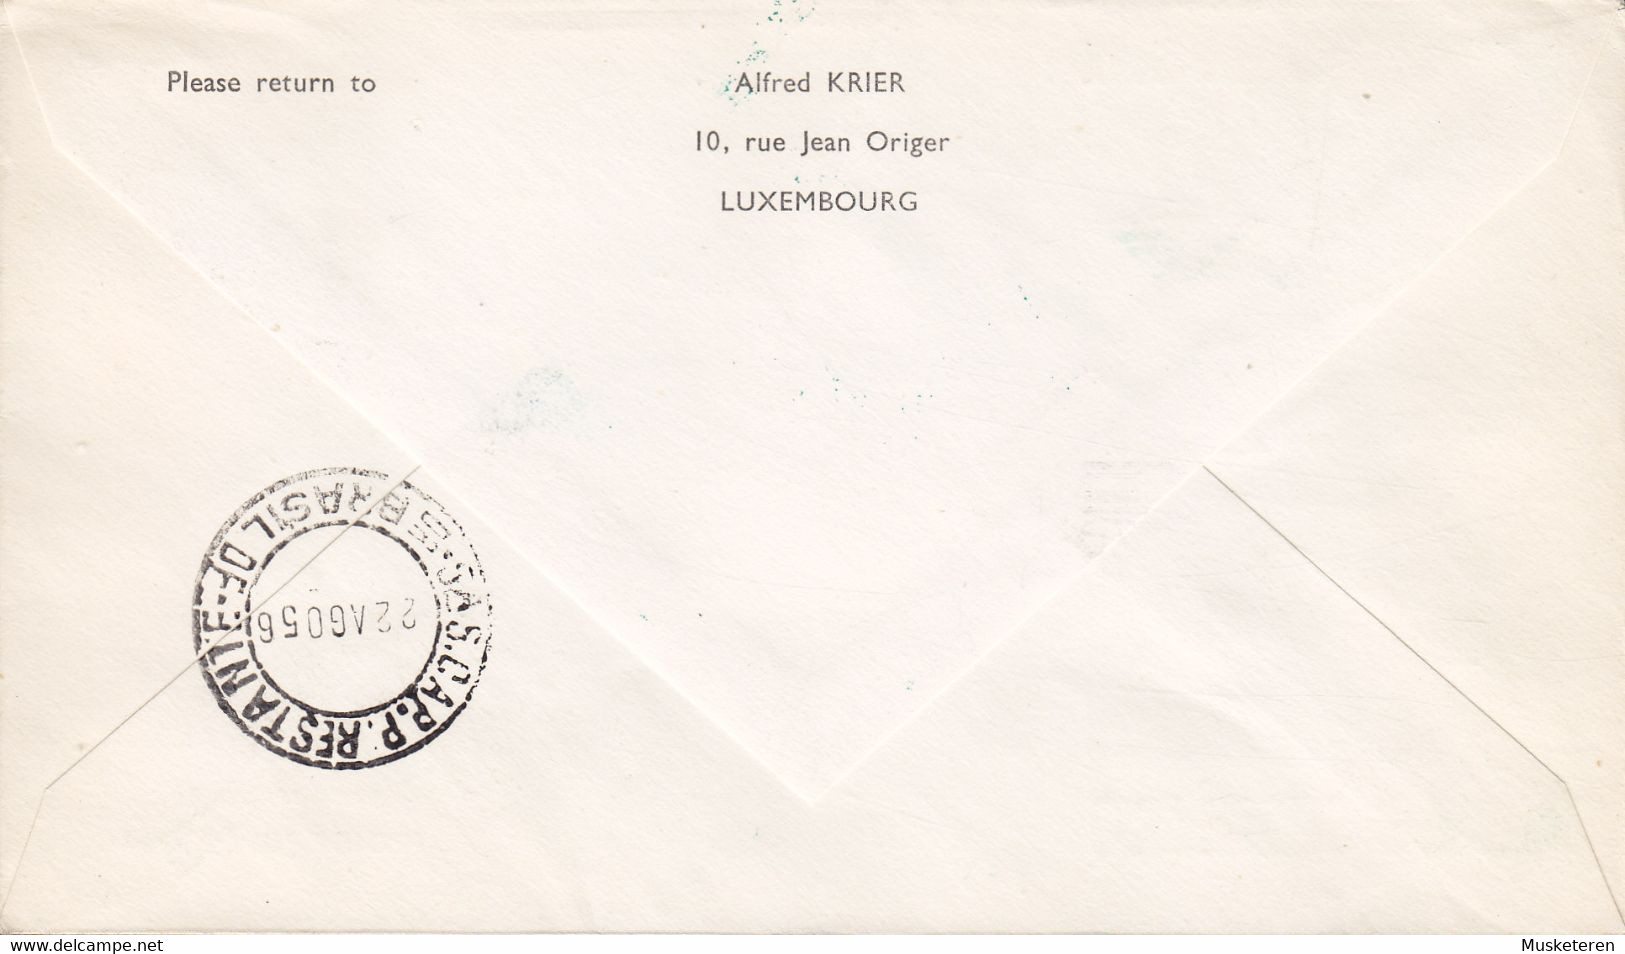 Luxembourg LUFTHANSA Wiederaufnahme Flugverkehrs Mit Südamerika LUXEMBOURG - RIO DE JANEIRO 1956 Cover Lettre Brief - Storia Postale